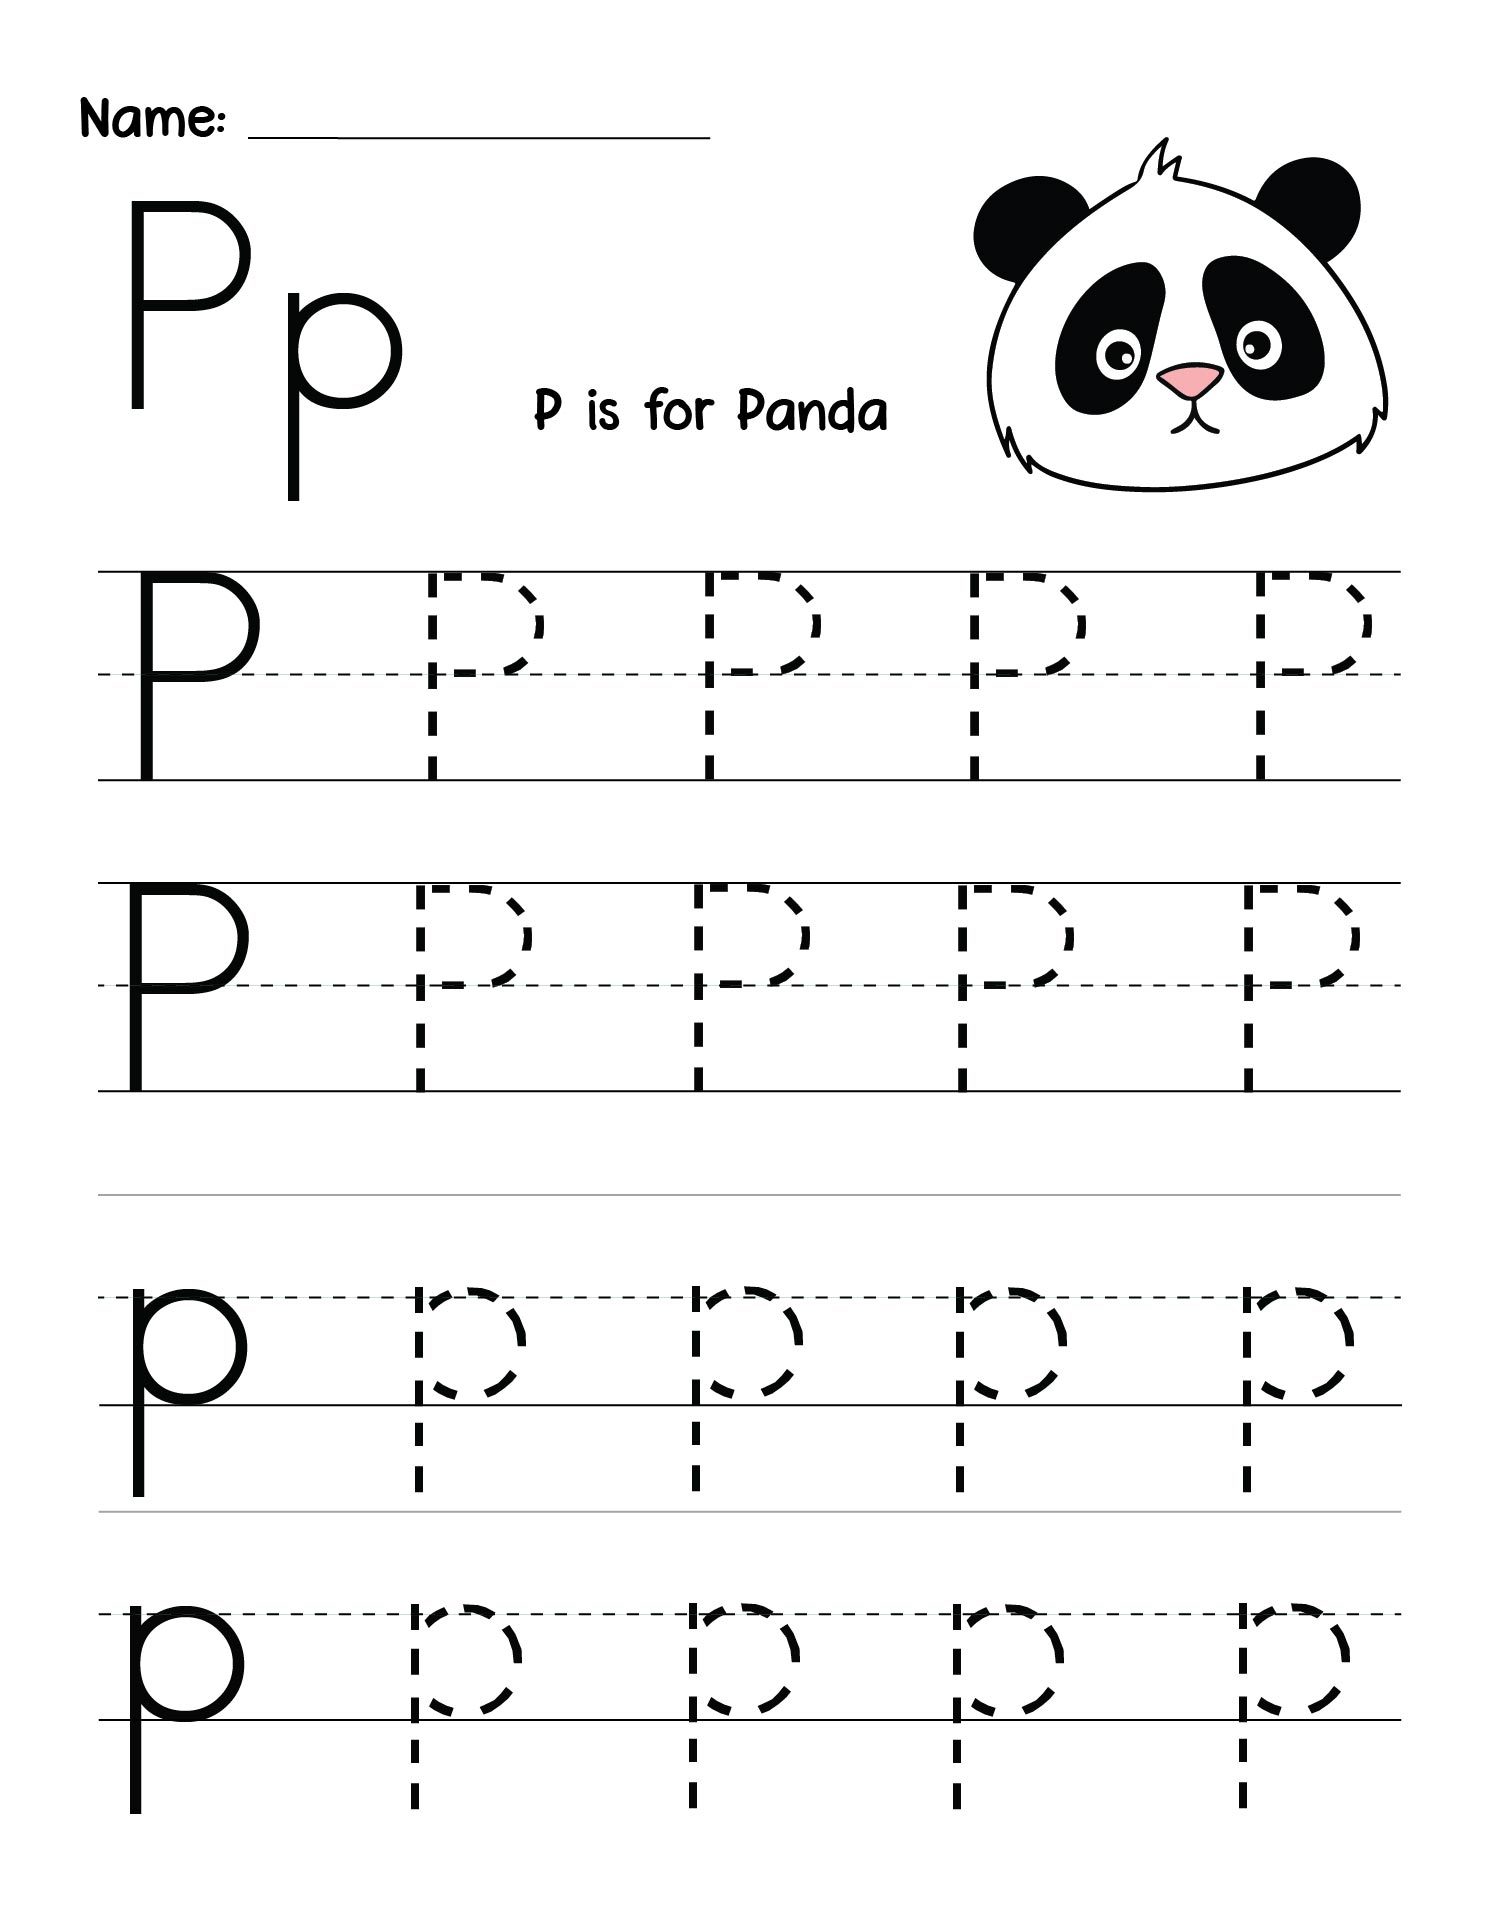 7 Best Images of Preschool Writing Worksheets Free Printable Letters